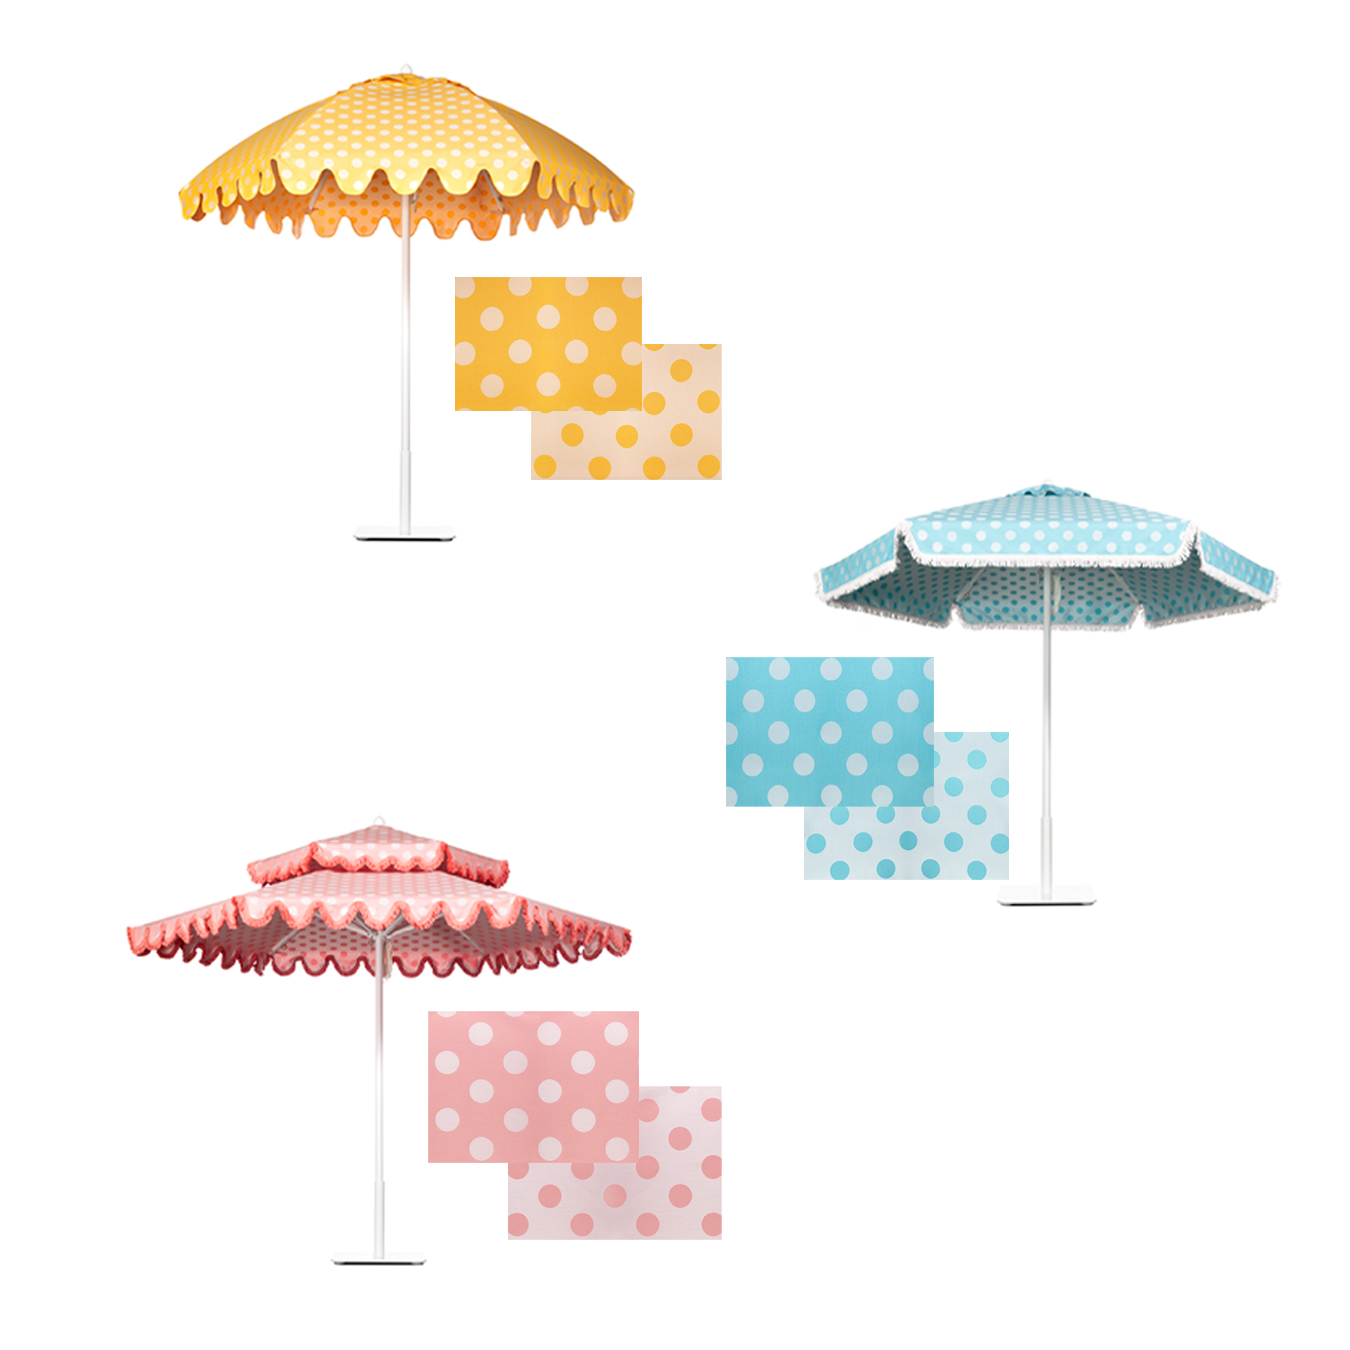 Image of three umbrellas with polka dot fabric